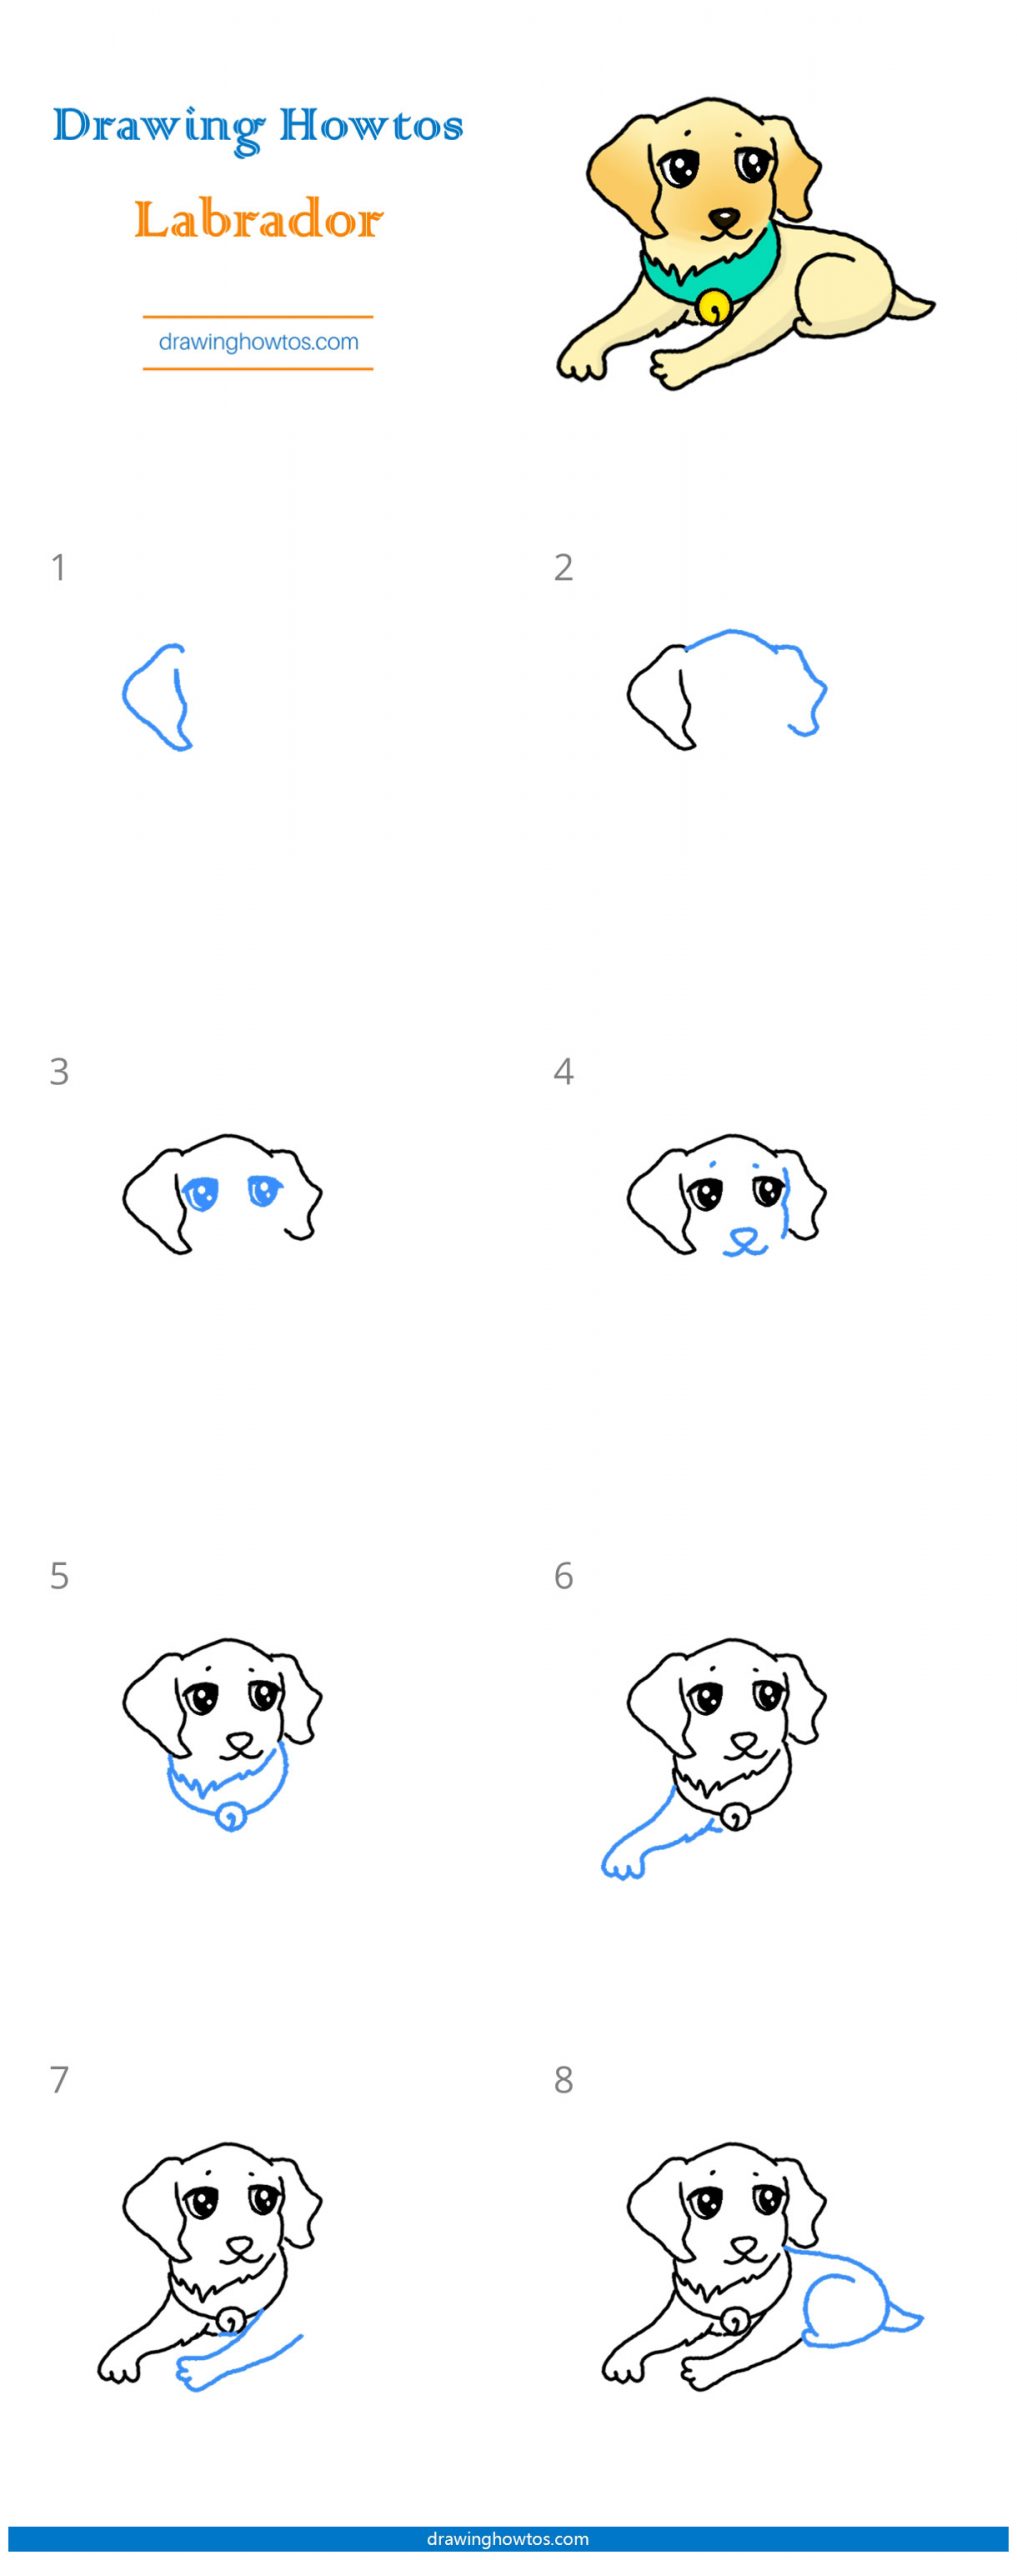 How to Draw a Labrador Step by Step